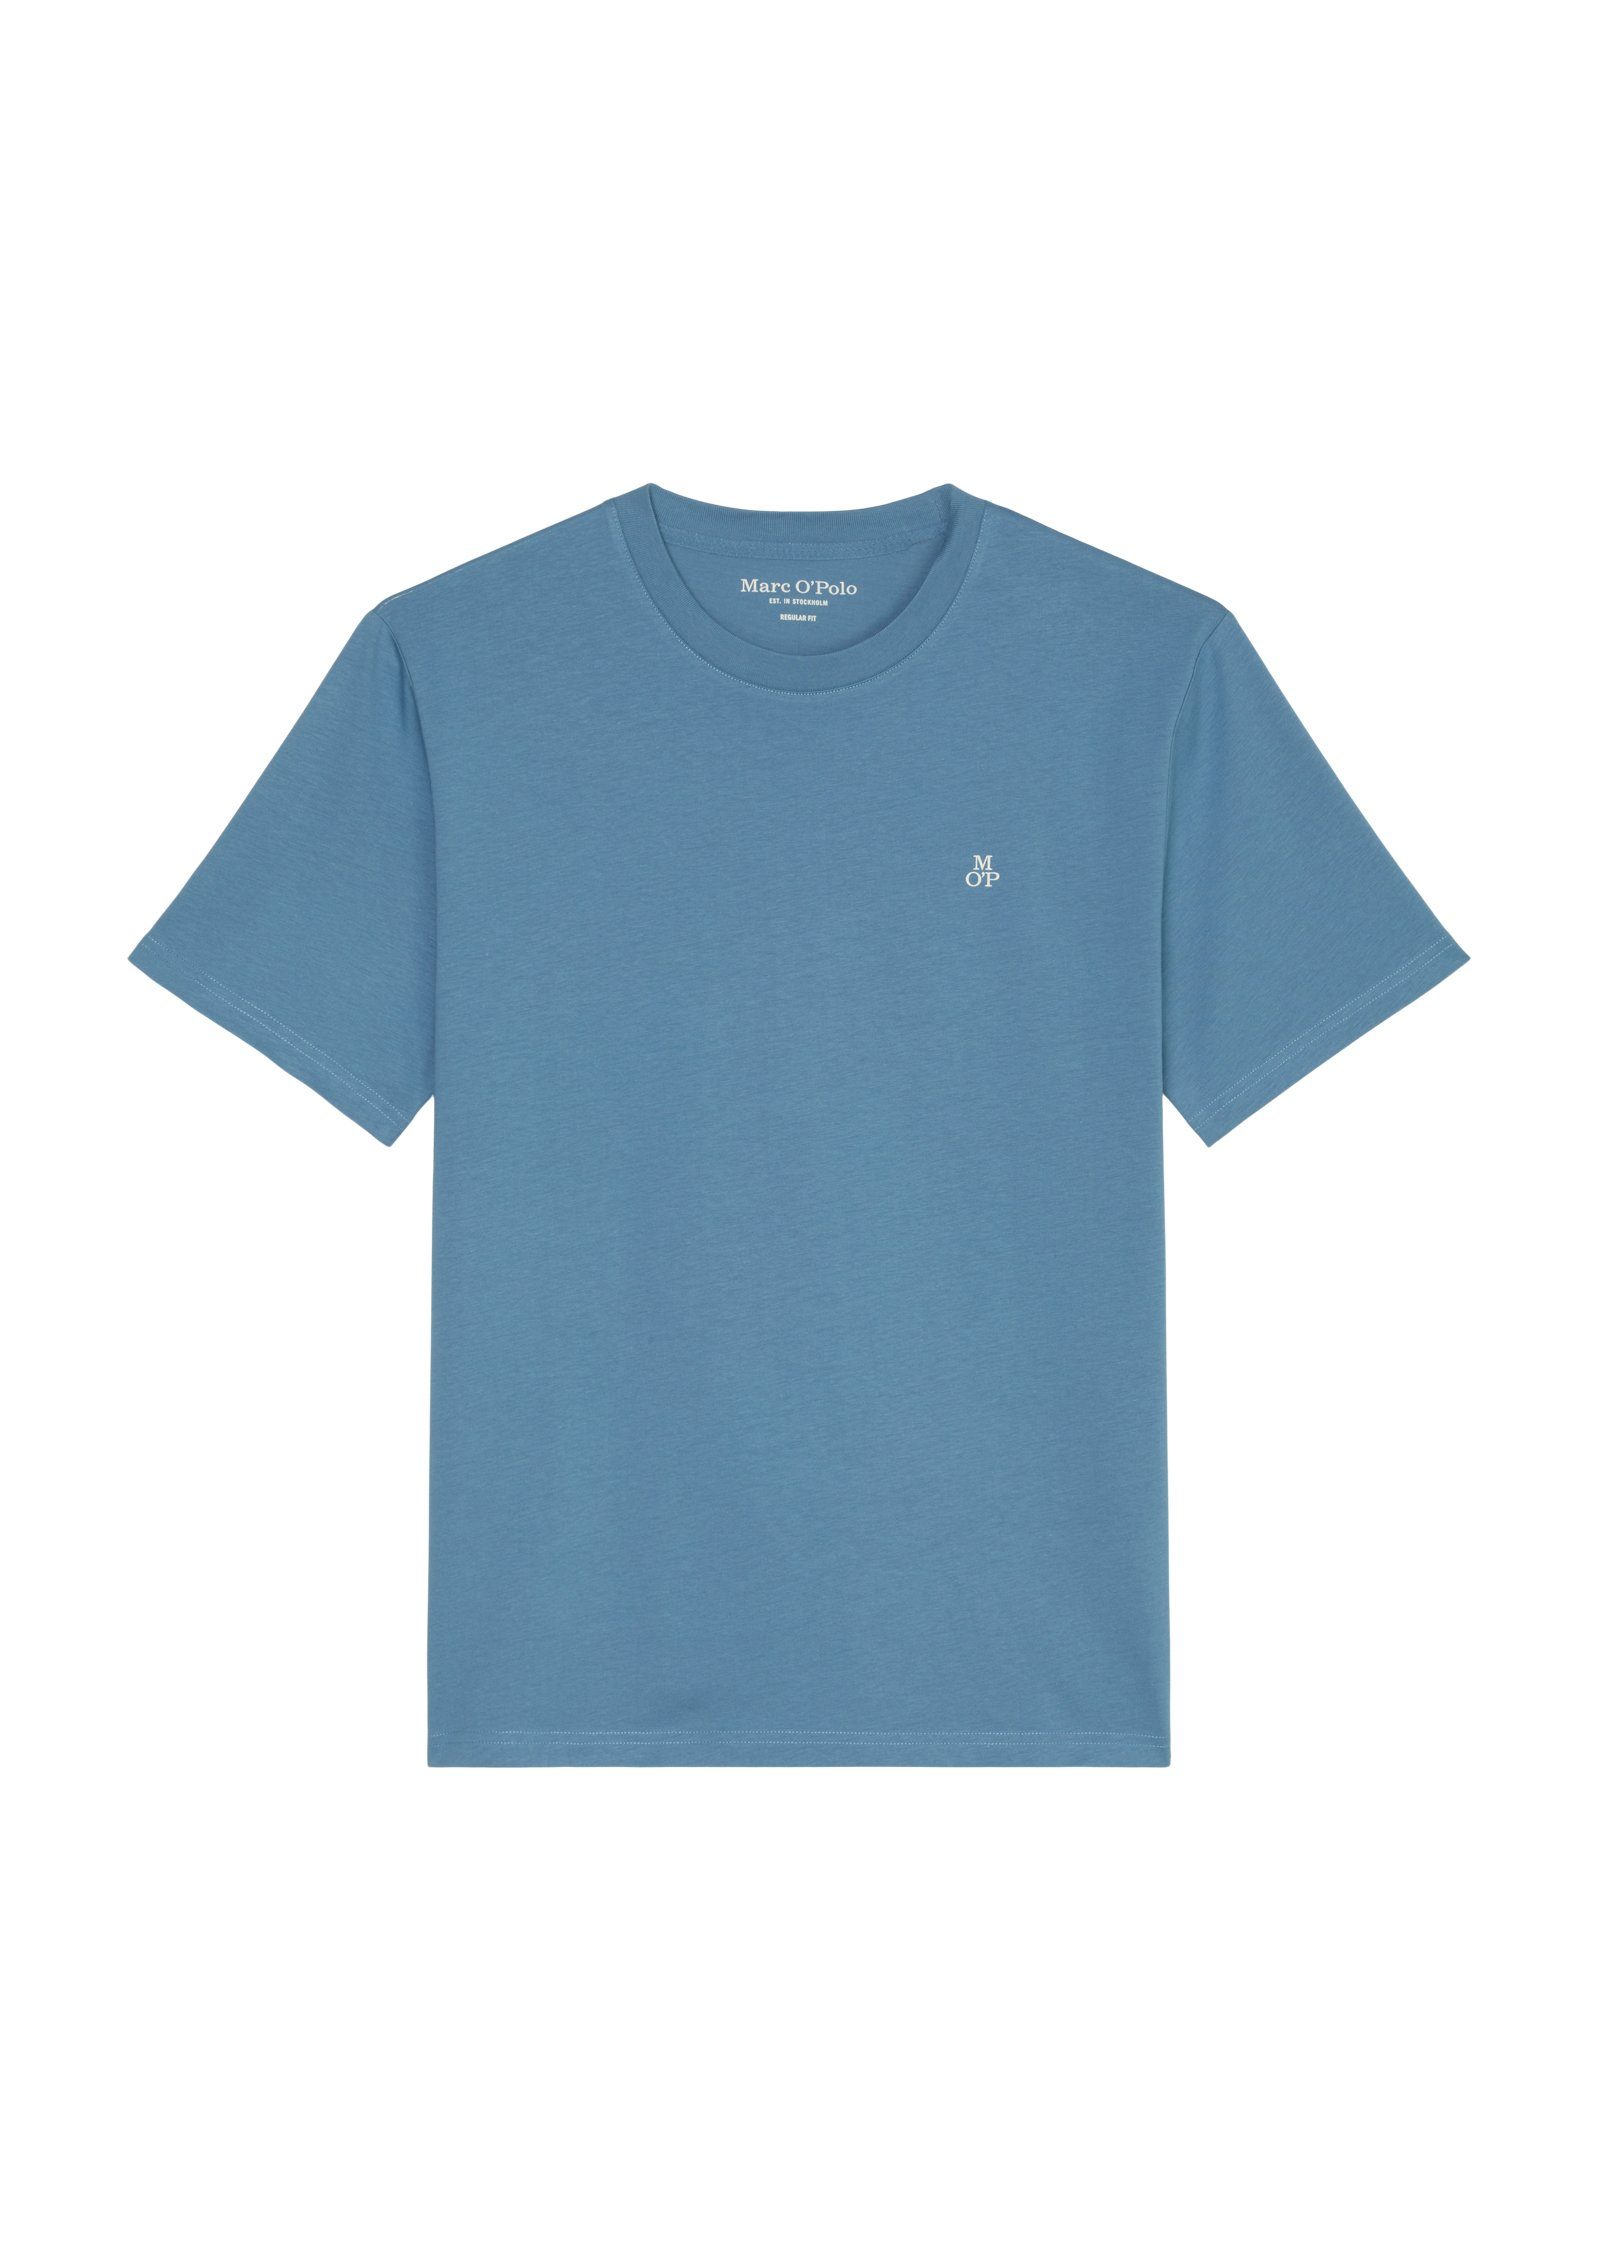 Marc O'Polo T-Shirt collar print, short sleeve, logo T-shirt, wedgewood ribbed